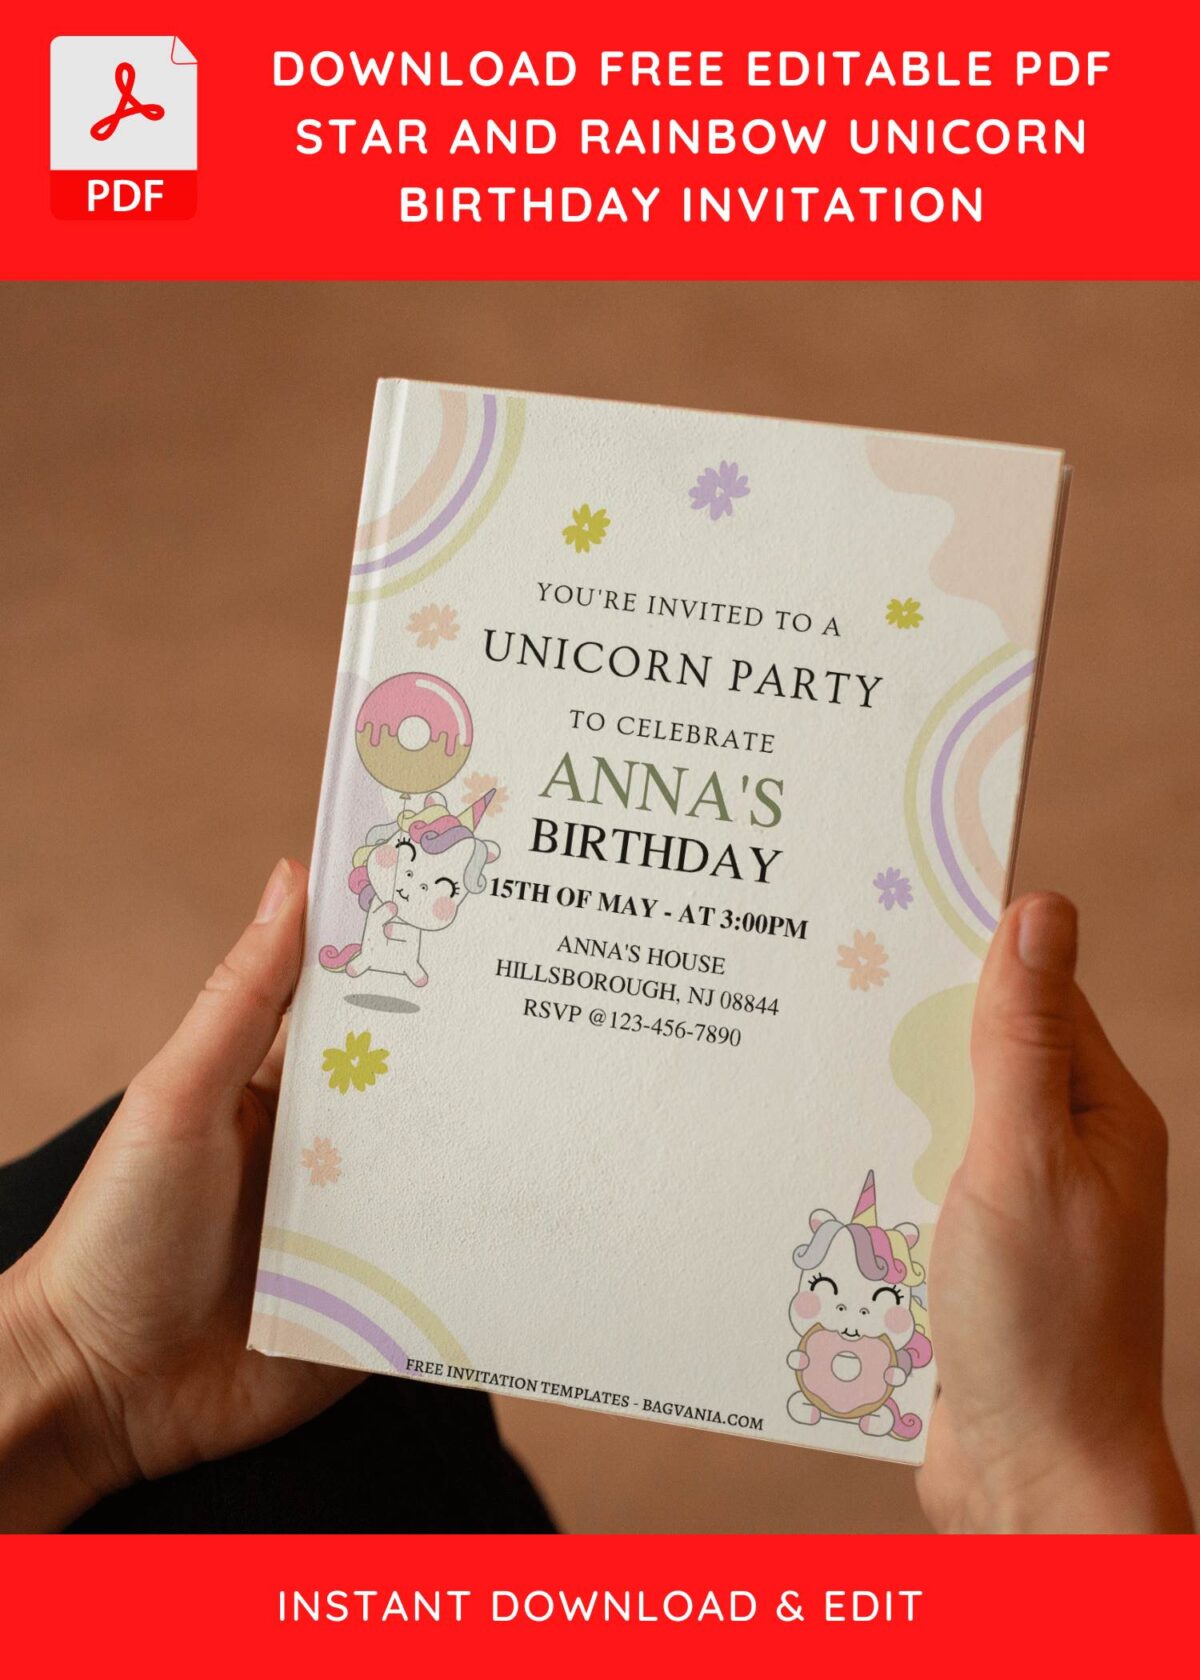 (Free Editable PDF) Spectral Rainbow Unicorn Birthday Invitation Templates E